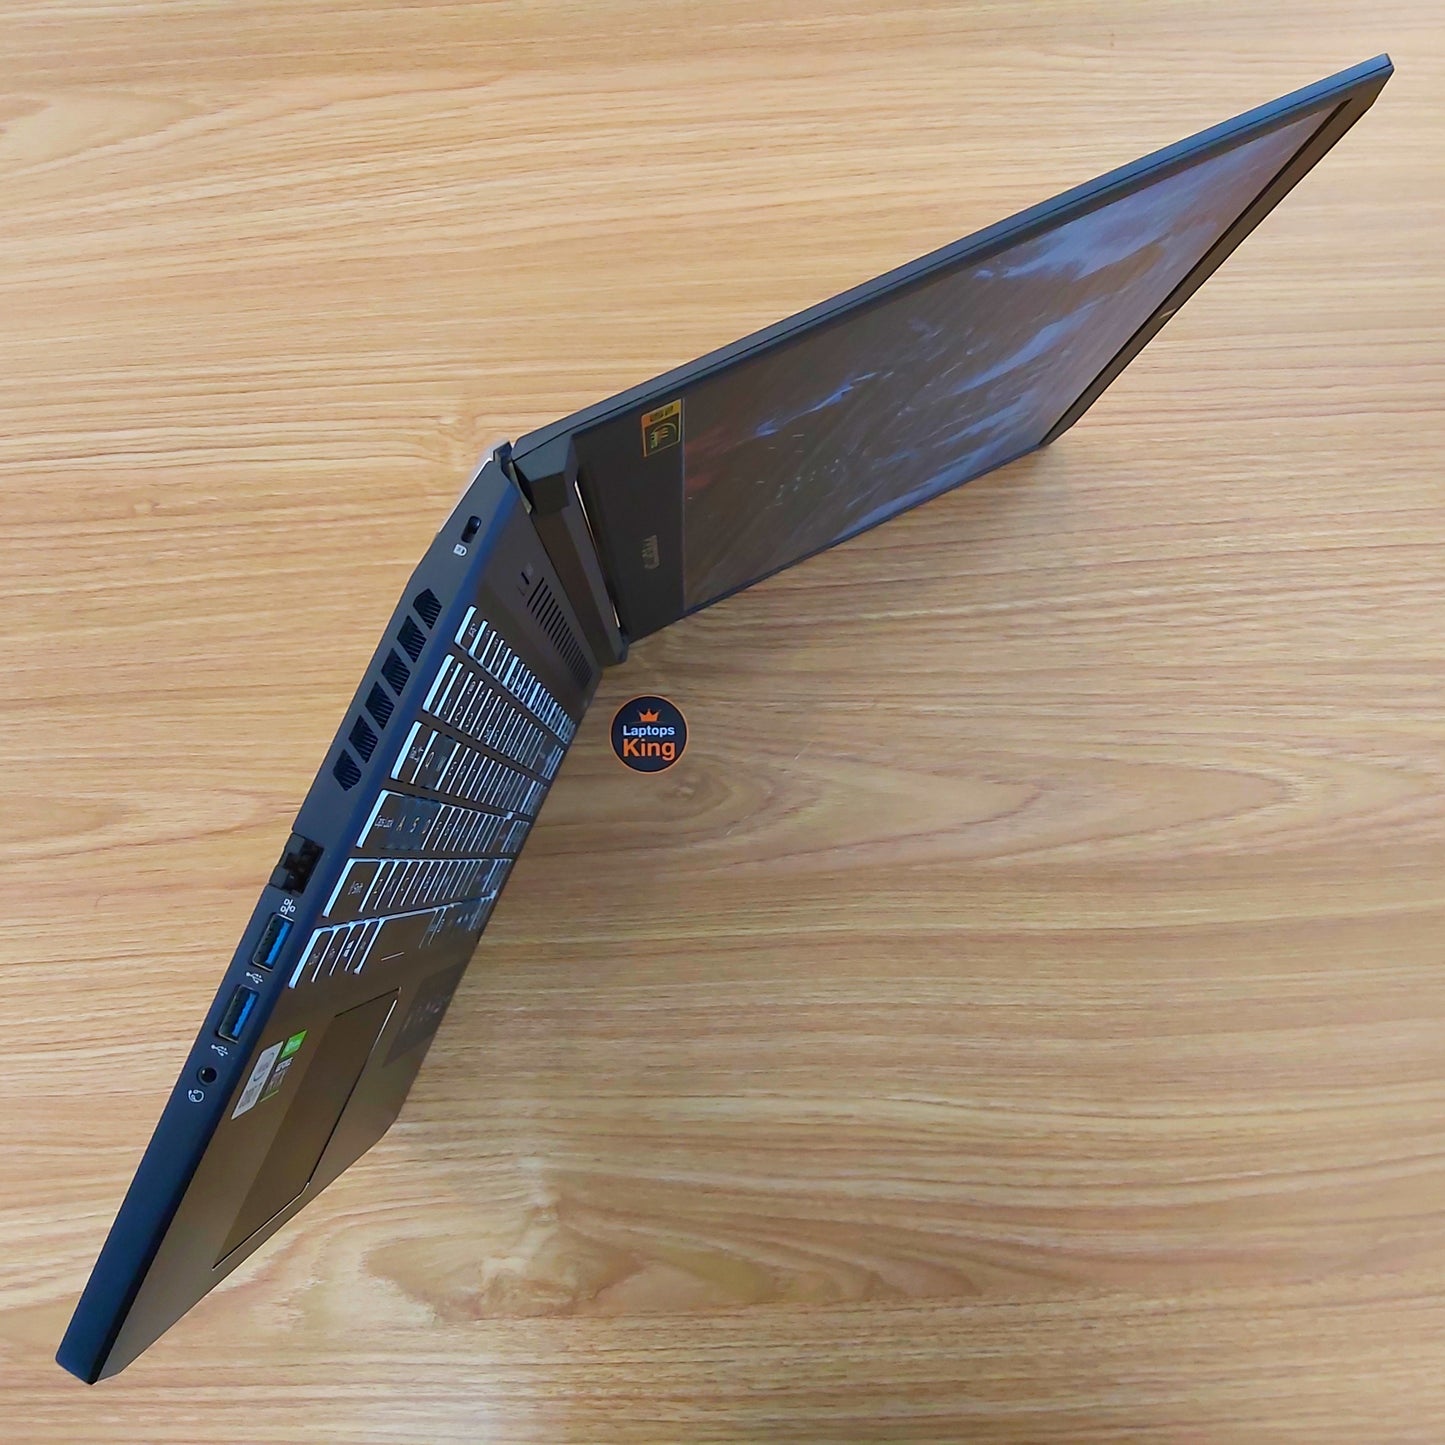 Acer Predator Helios 300 PH315-53 i7-10750h Rtx 3070 144hz Gaming Laptop (Open Box)